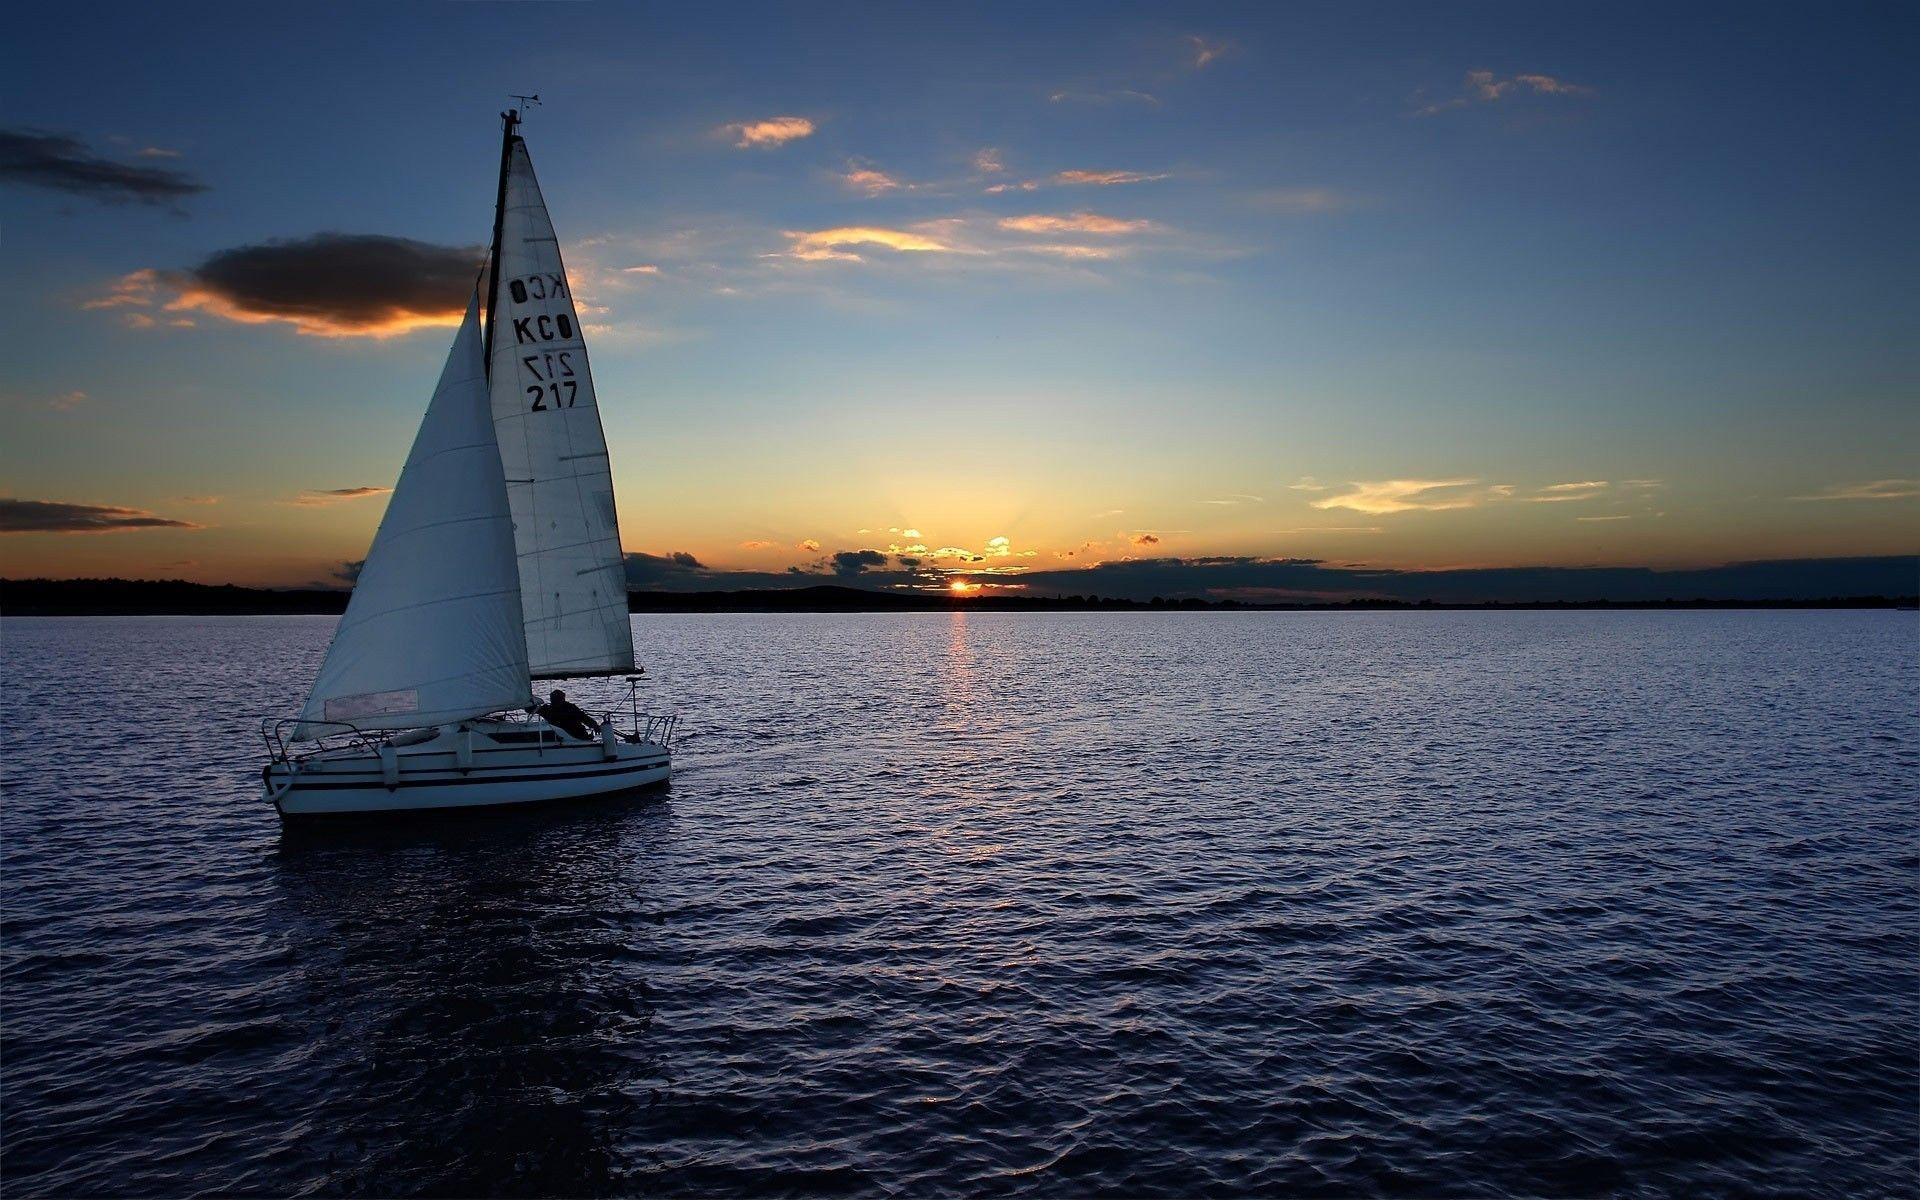 Sail Boat: A sea-going sail-driven vessel, Recreational sailing at sunset. 1920x1200 HD Wallpaper.